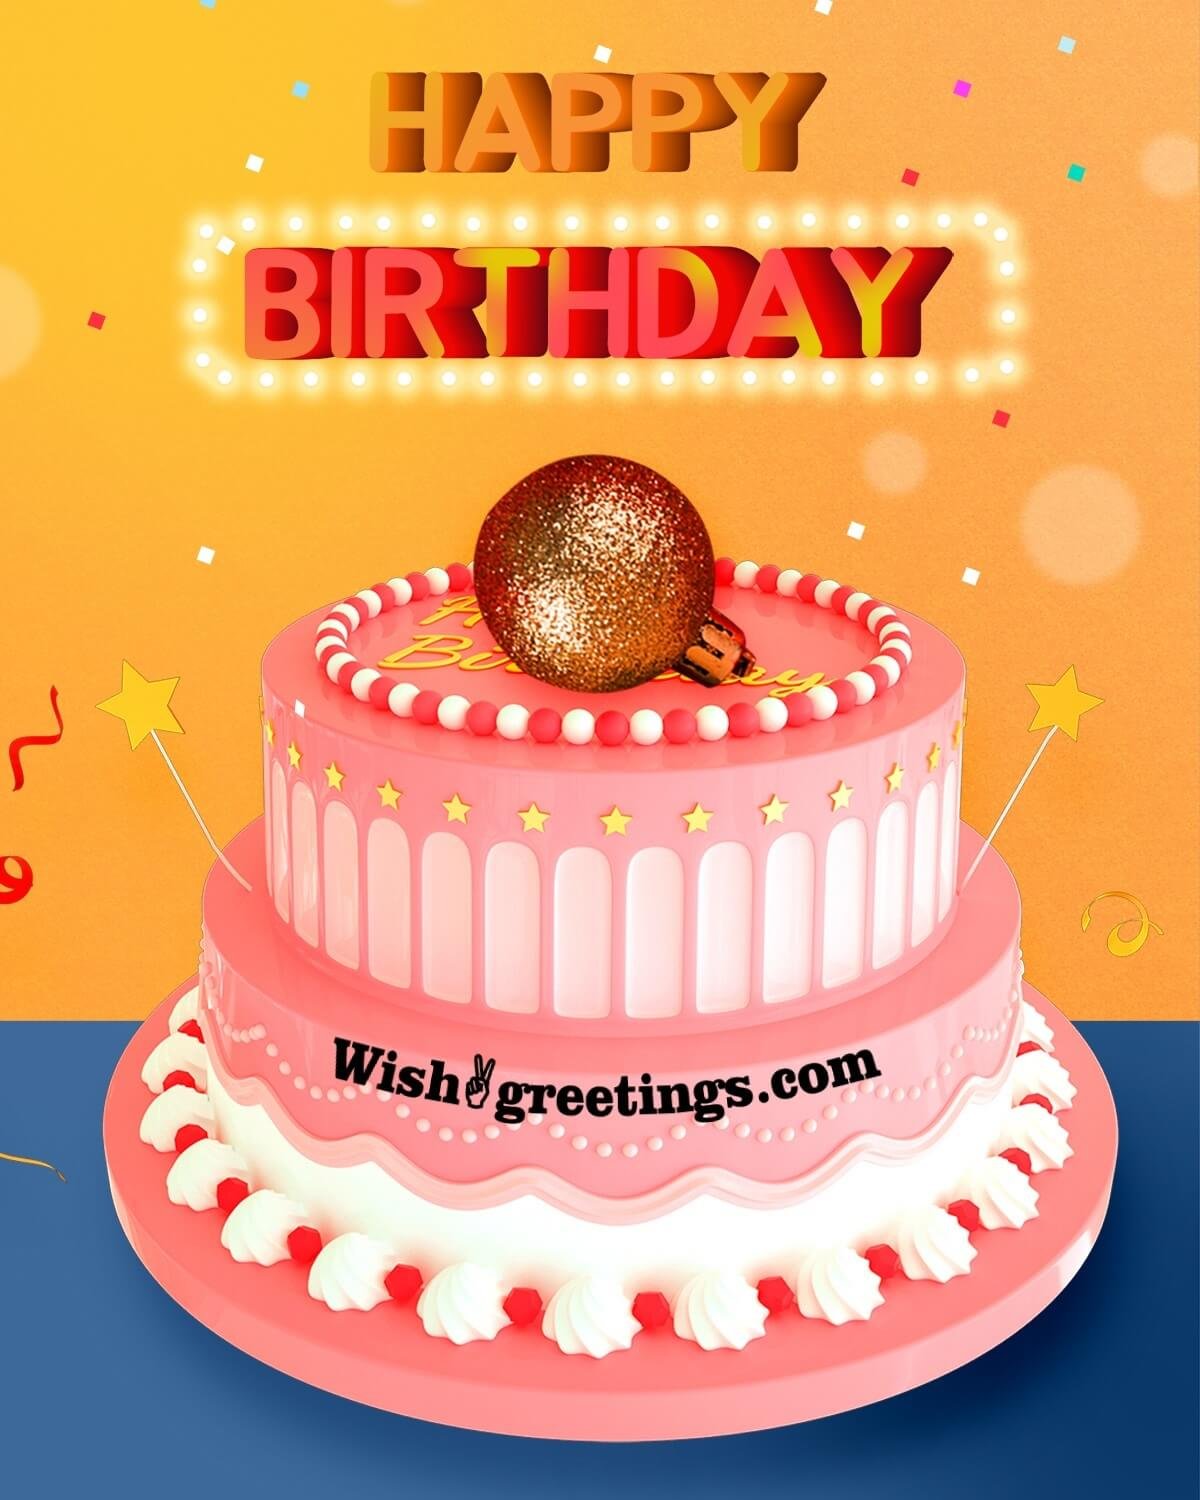 Happy Birthday Wishes Cake Images - Wish Greetings